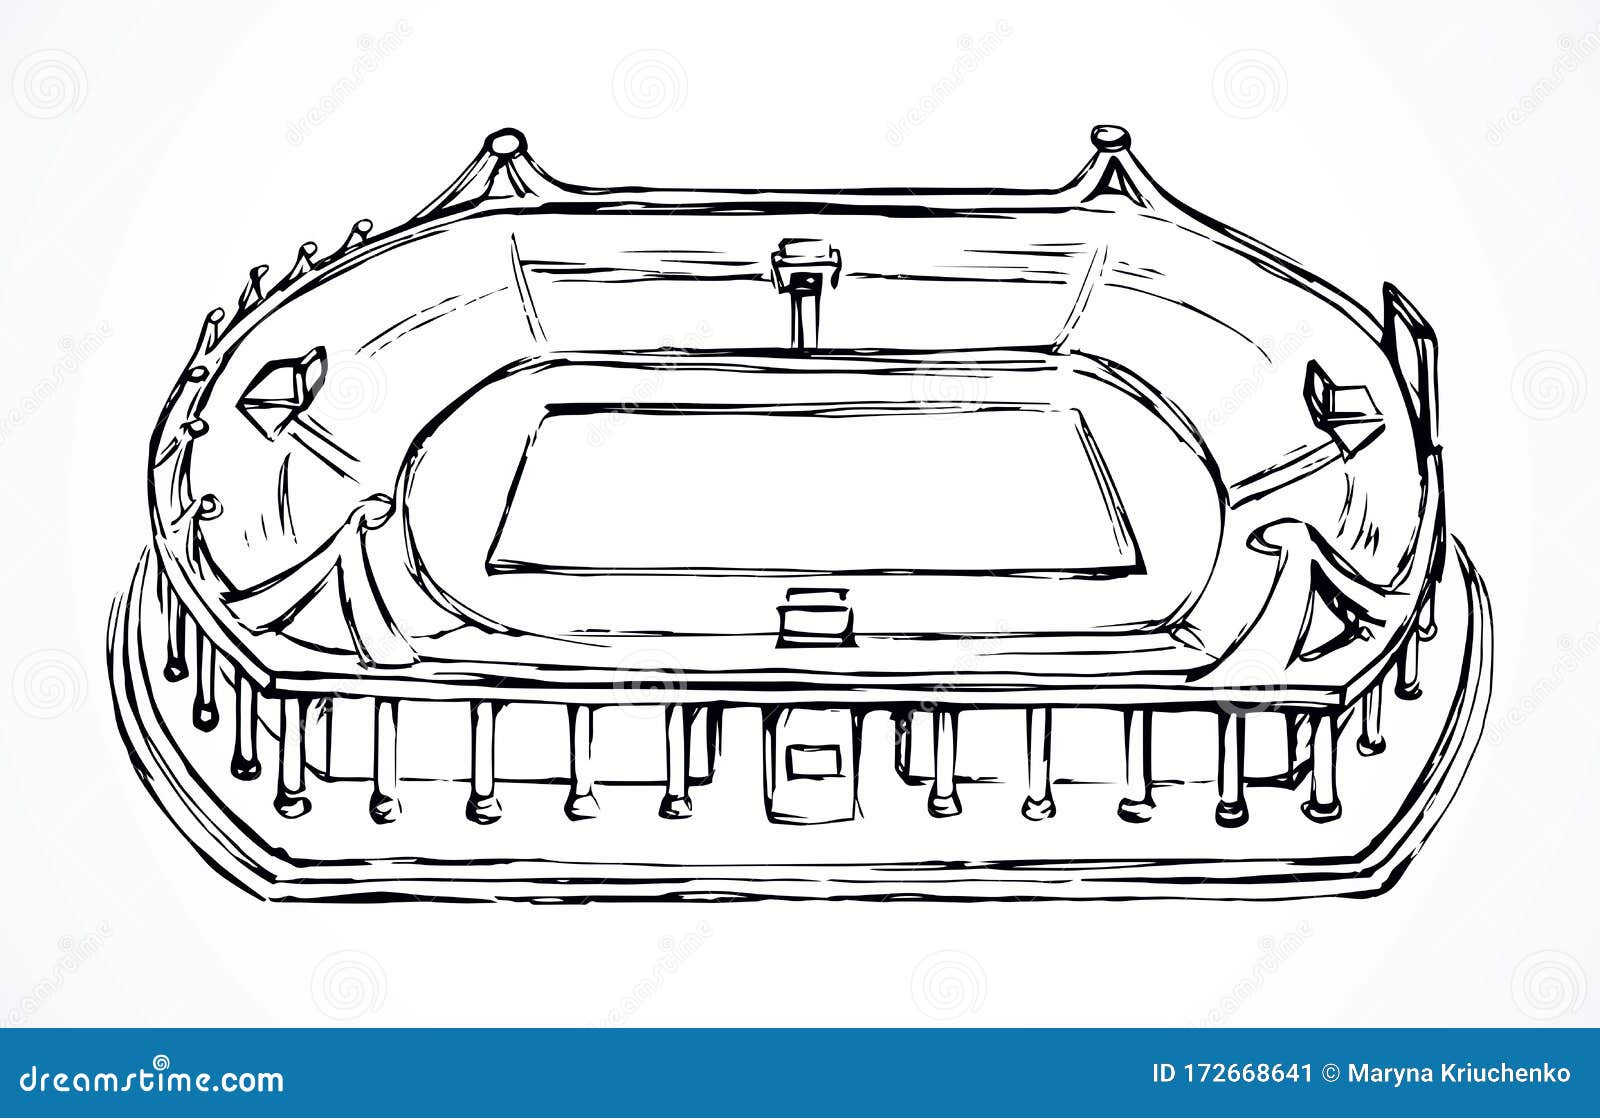 Small Stadium Vector Sketch Stock Vector Illustration Of Outdoor Bleachers